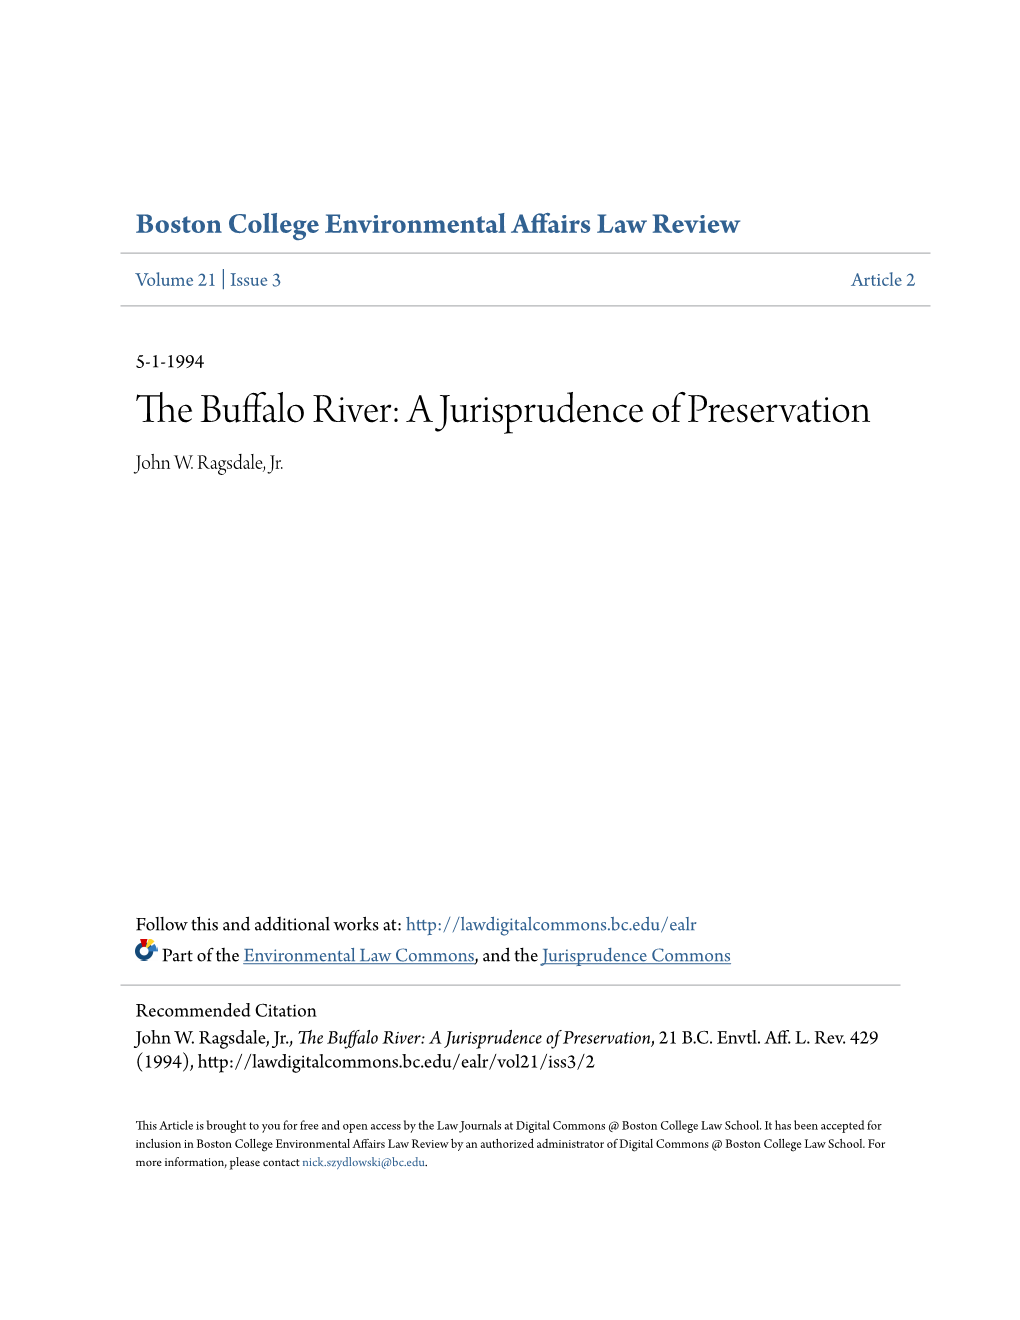 The Buffalo River: a Jurisprudence of Preservation, 21 B.C